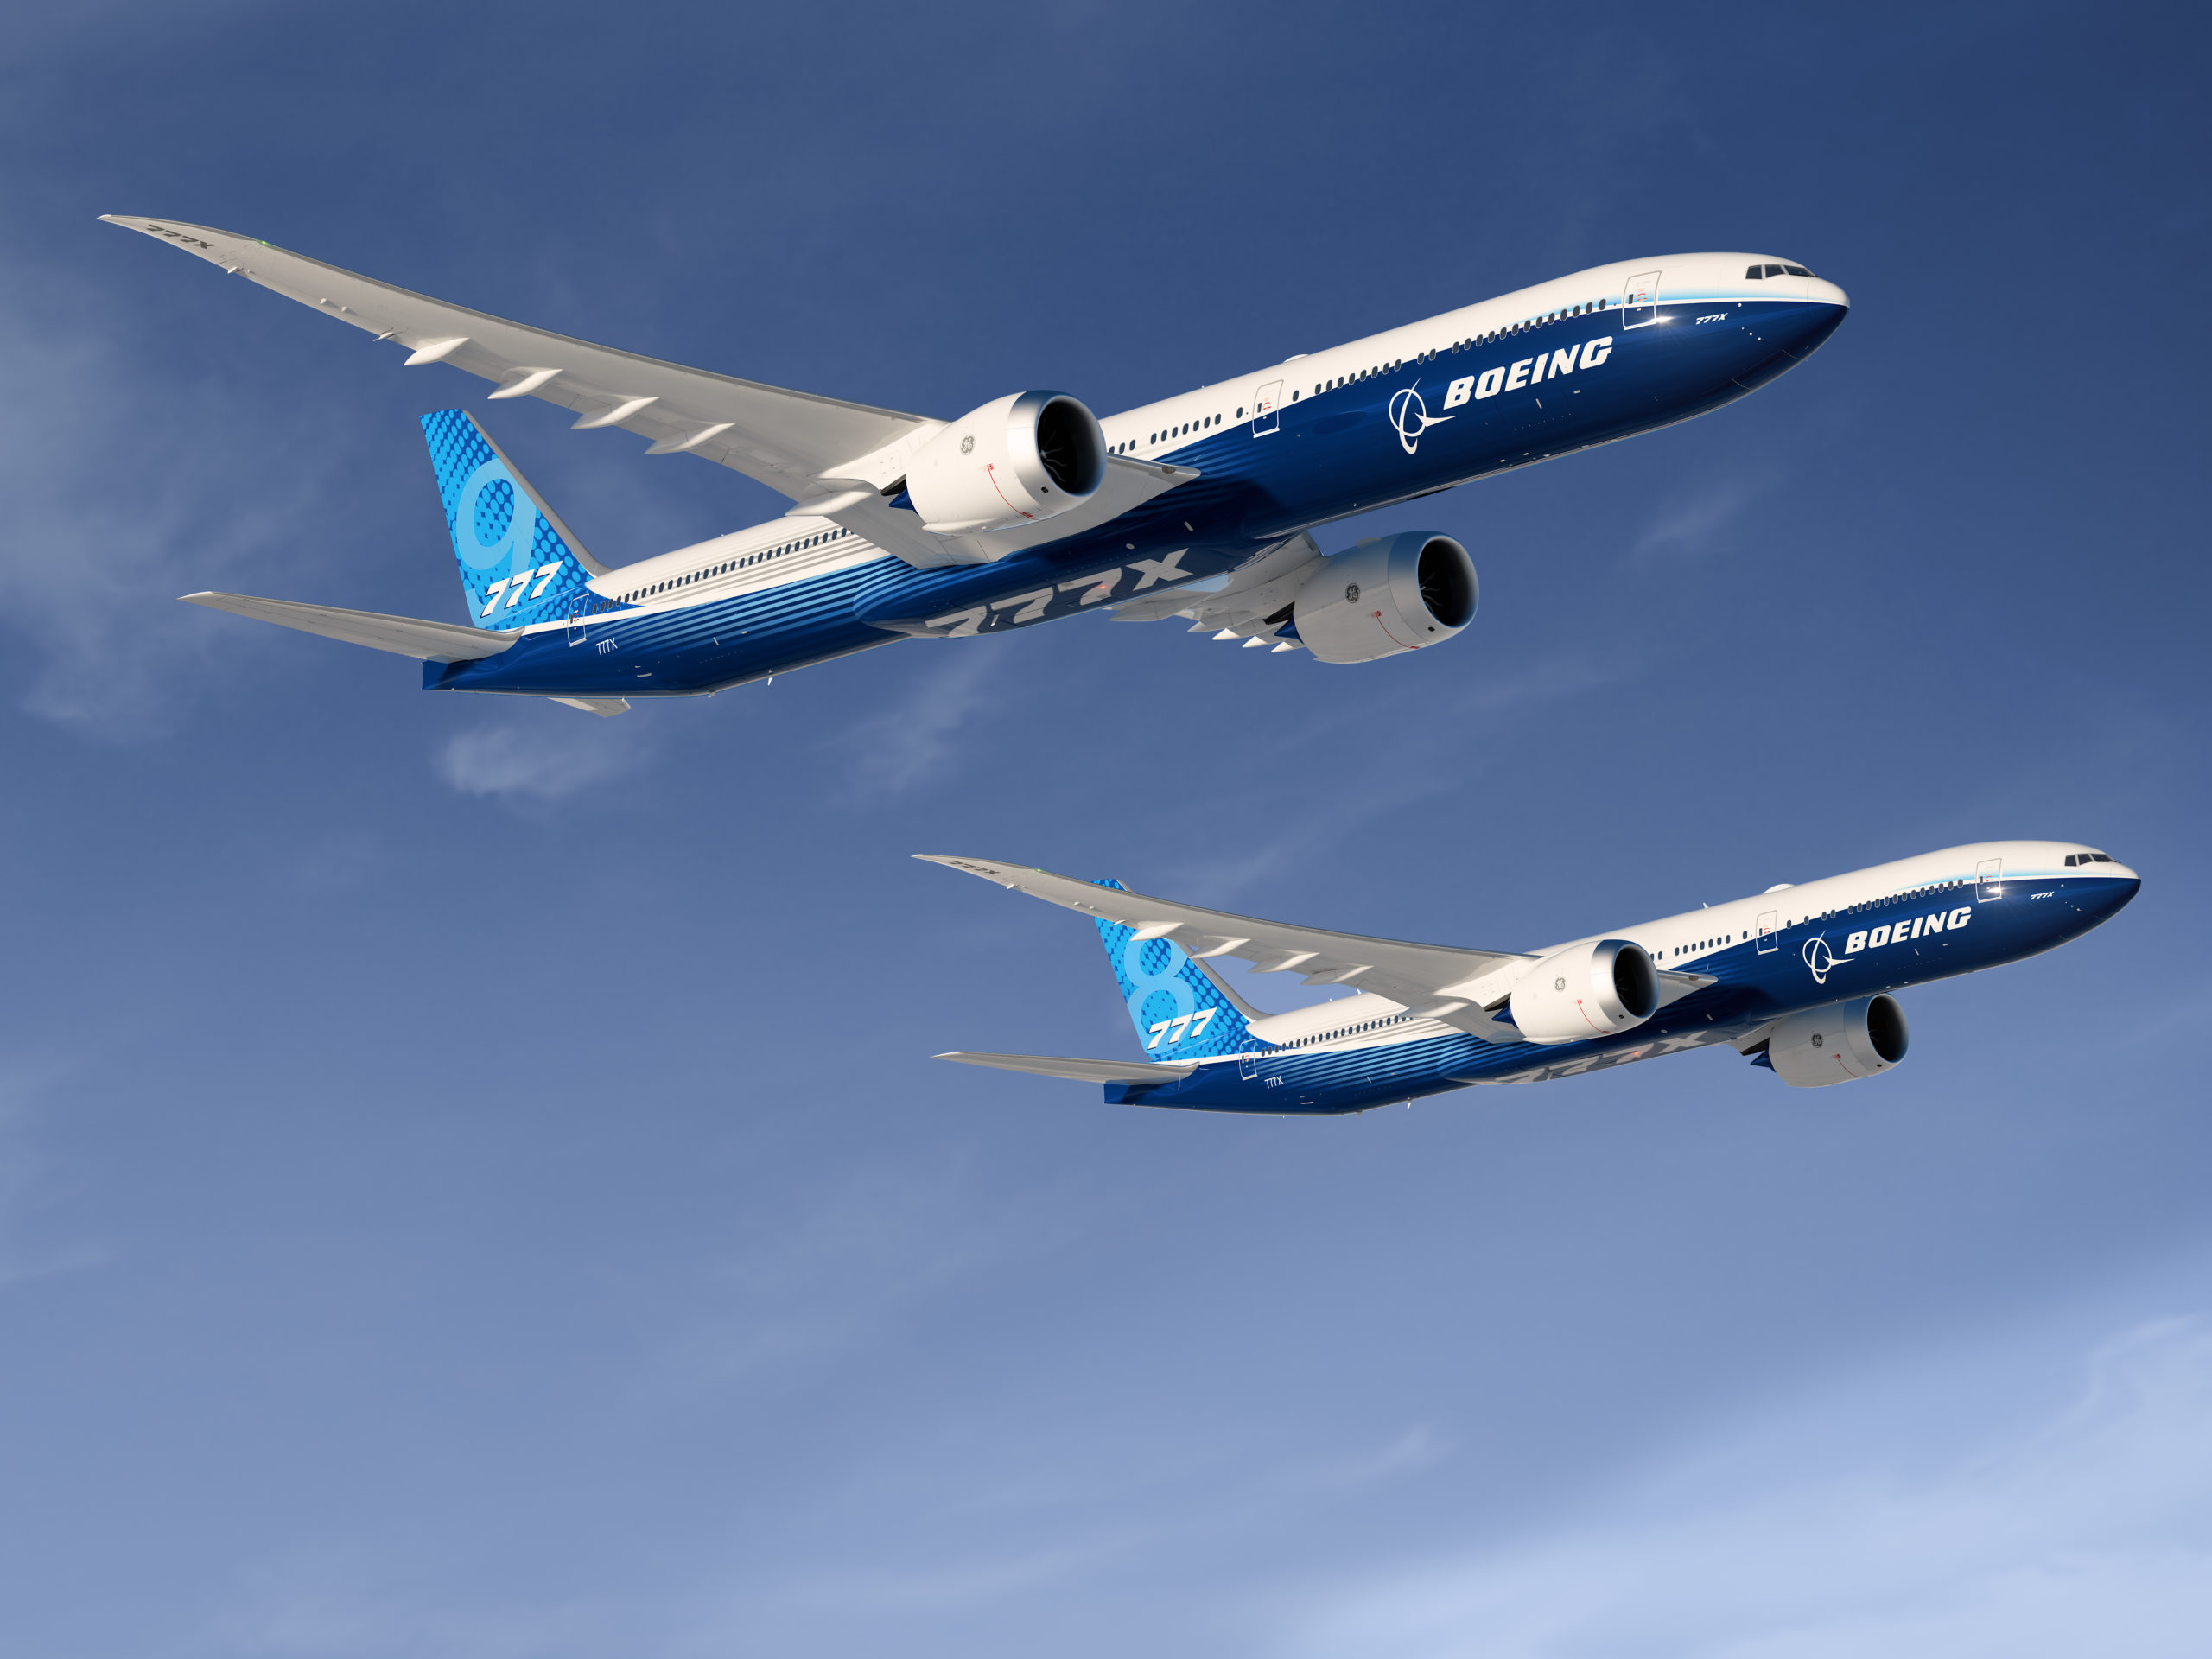 Paris Air Show: Boeing Looks to Close the Show